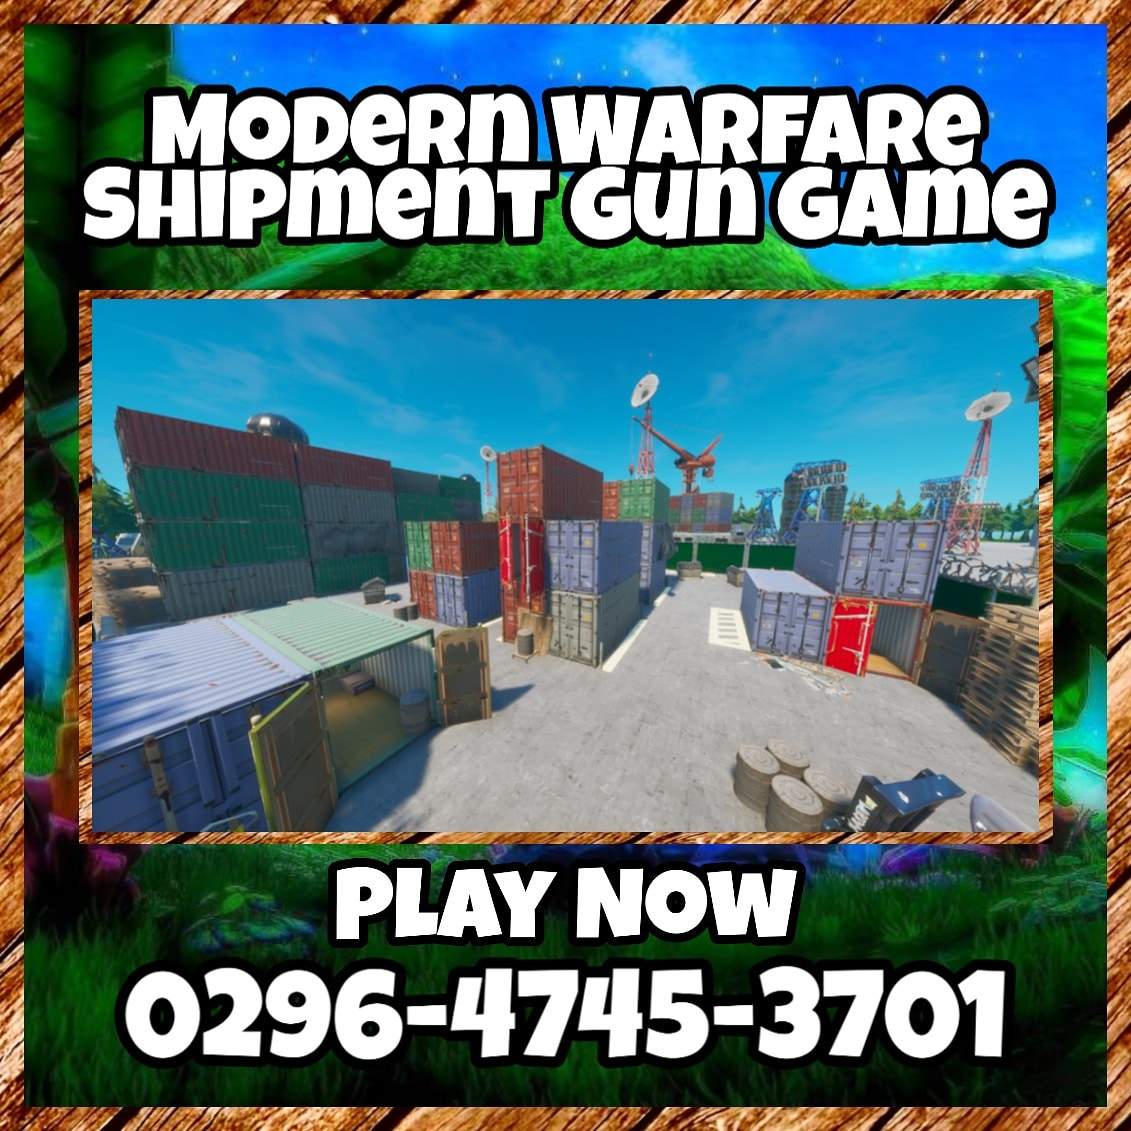 Gun Game Fortnite Code NEW SHIPMENT GUN GAME - Fortnite Creative Map Code - Dropnite